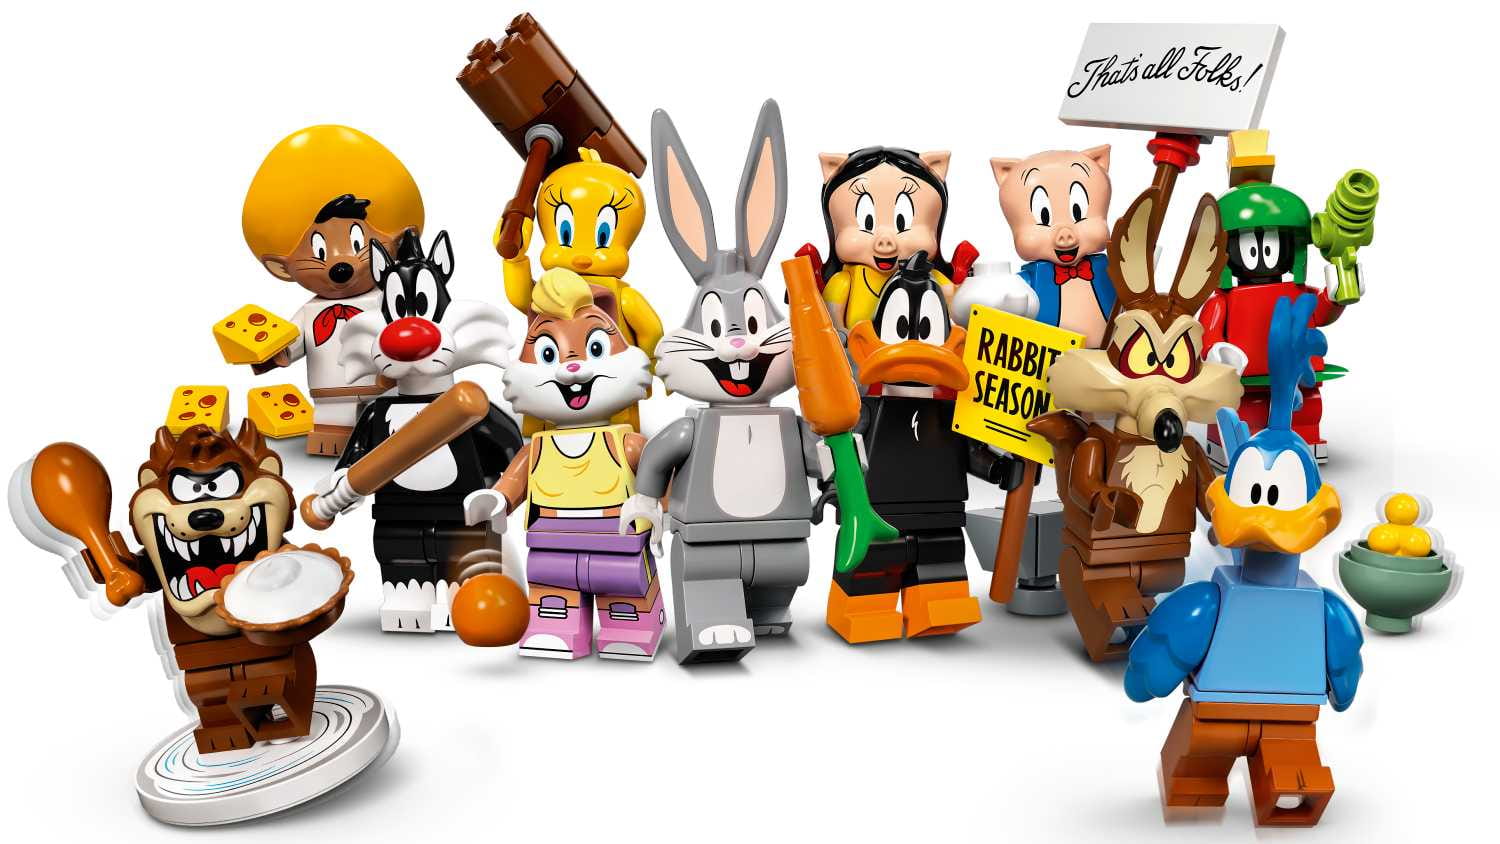 LEGO® Minifiguren Set Looney Tunes